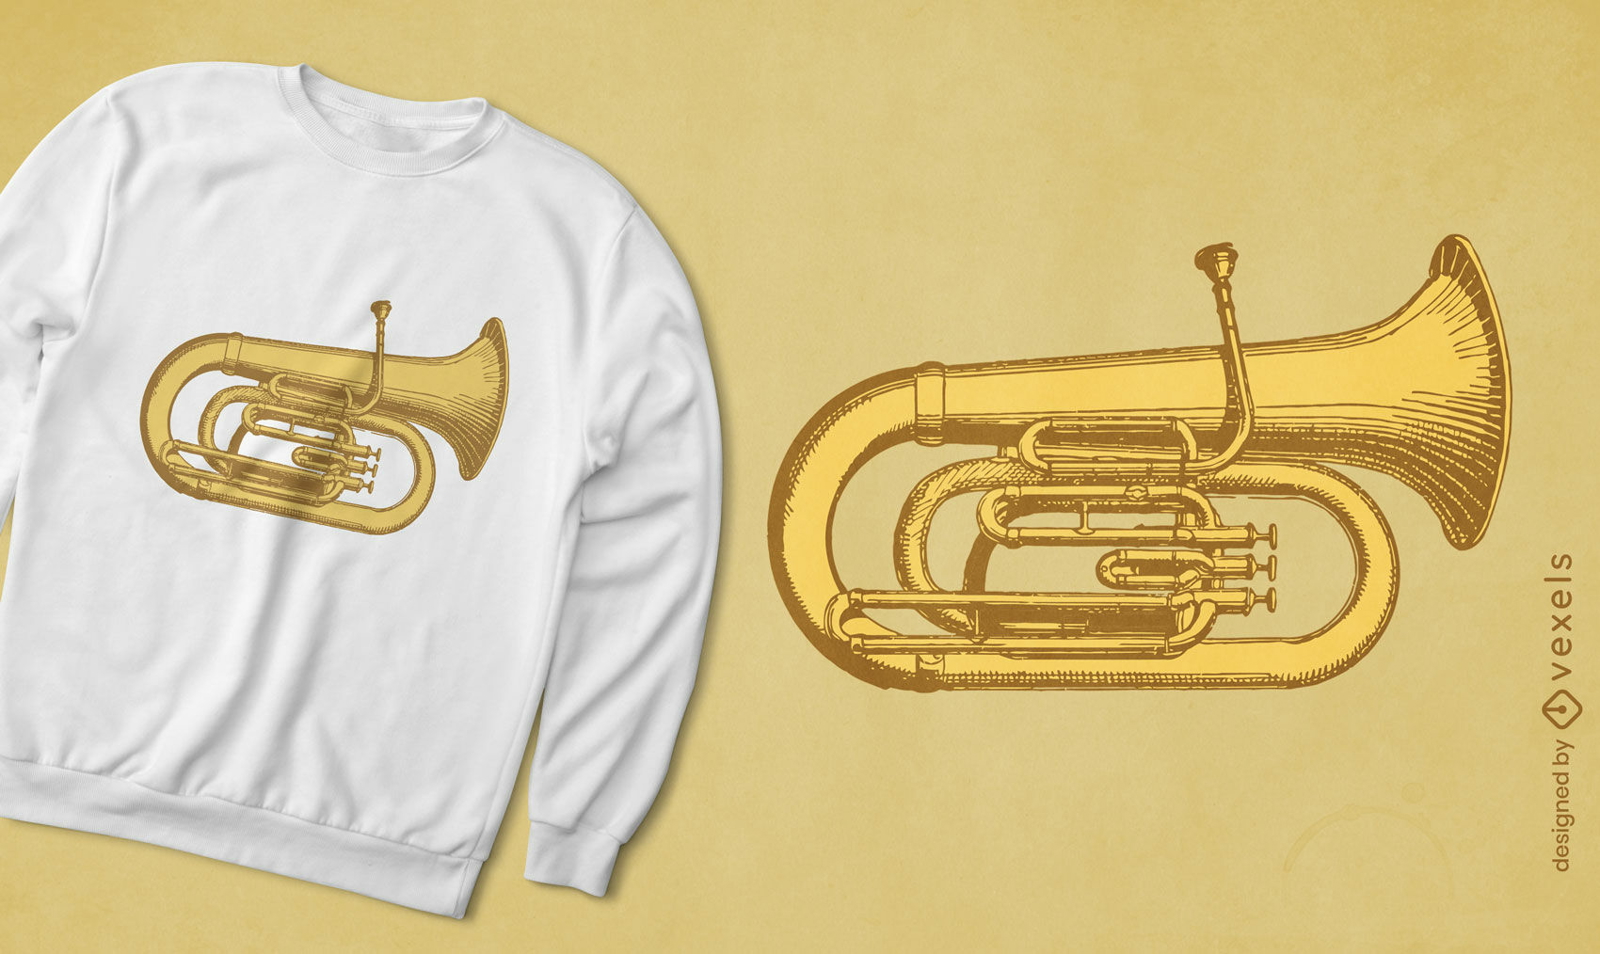 Dise?o de camiseta de instrumento de trompeta.